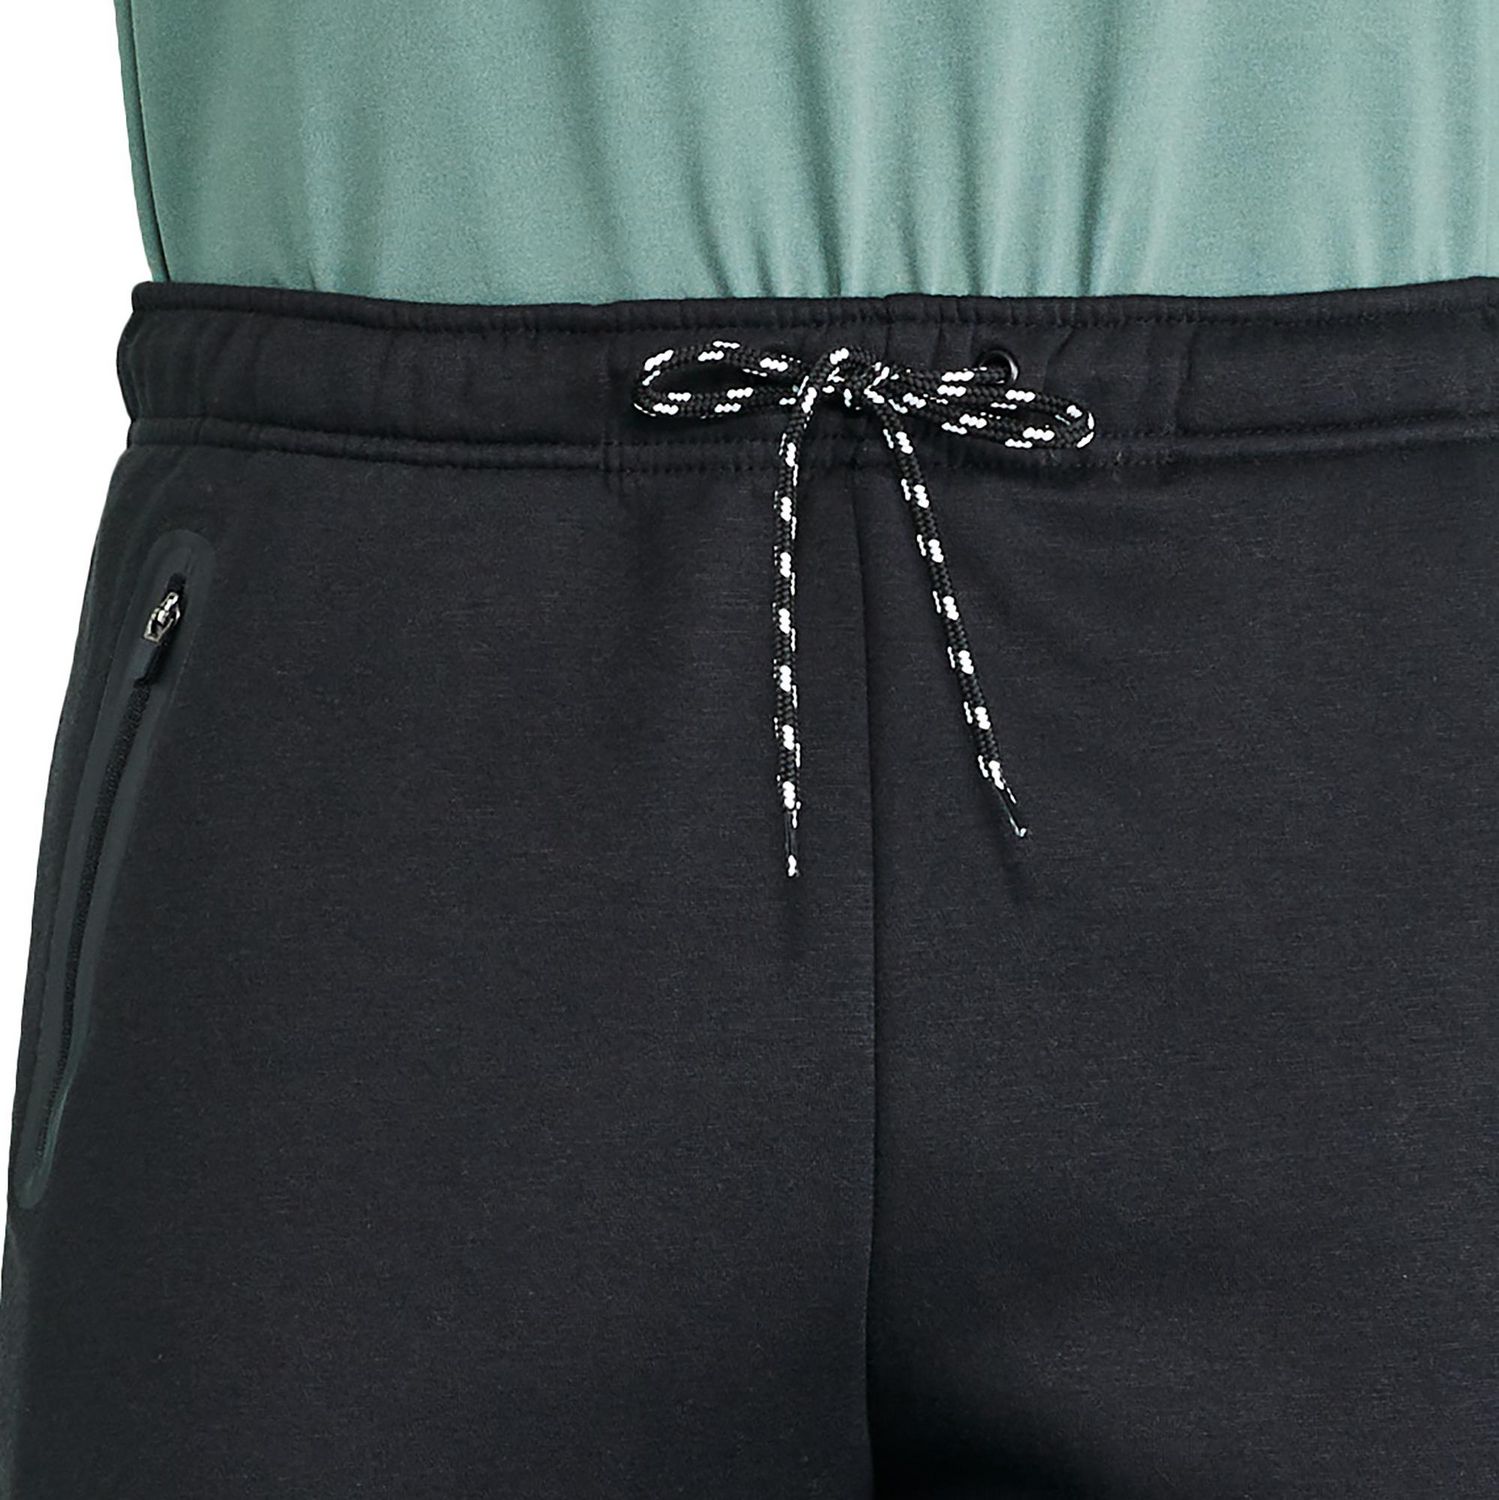 IZOD Men's Saltwater Stretch Flat-Front Chino Pants, Pale Khaki Slim, 29W x  30L at Amazon Men's Clothing store